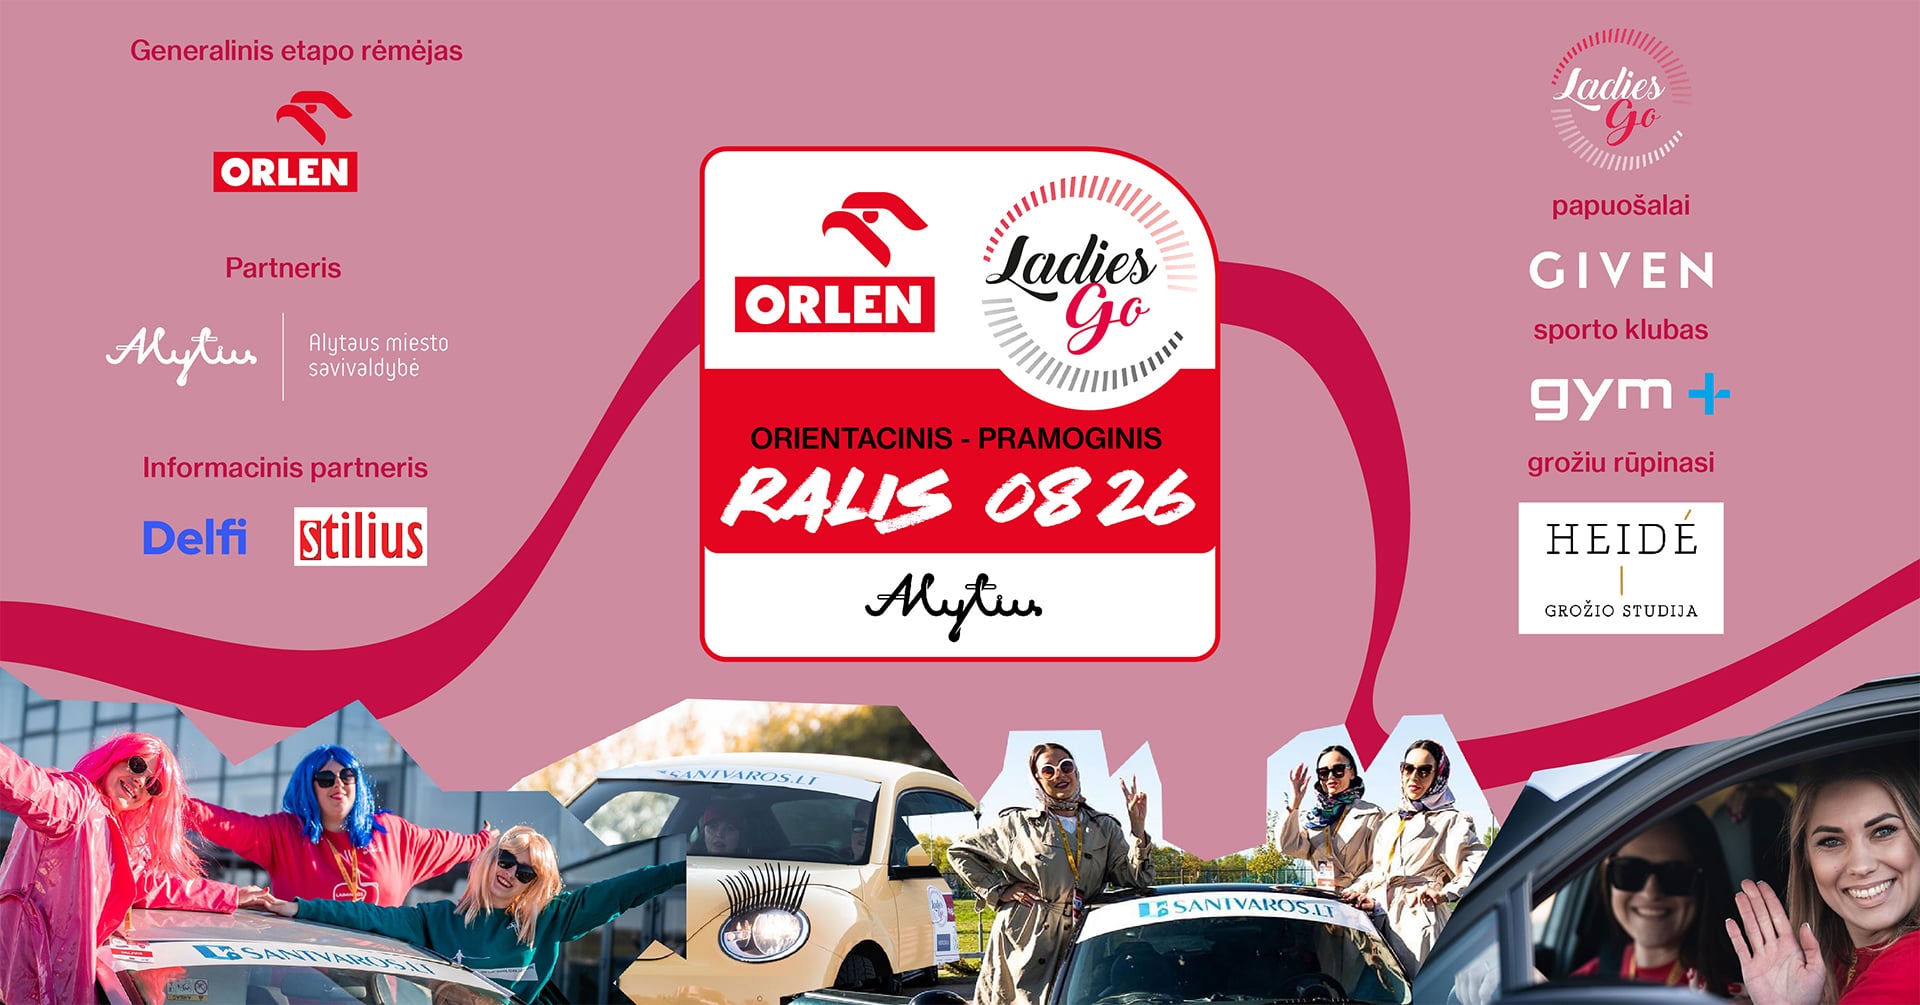 ORLEN Ladies Go orientacinis-pramoginis ralis